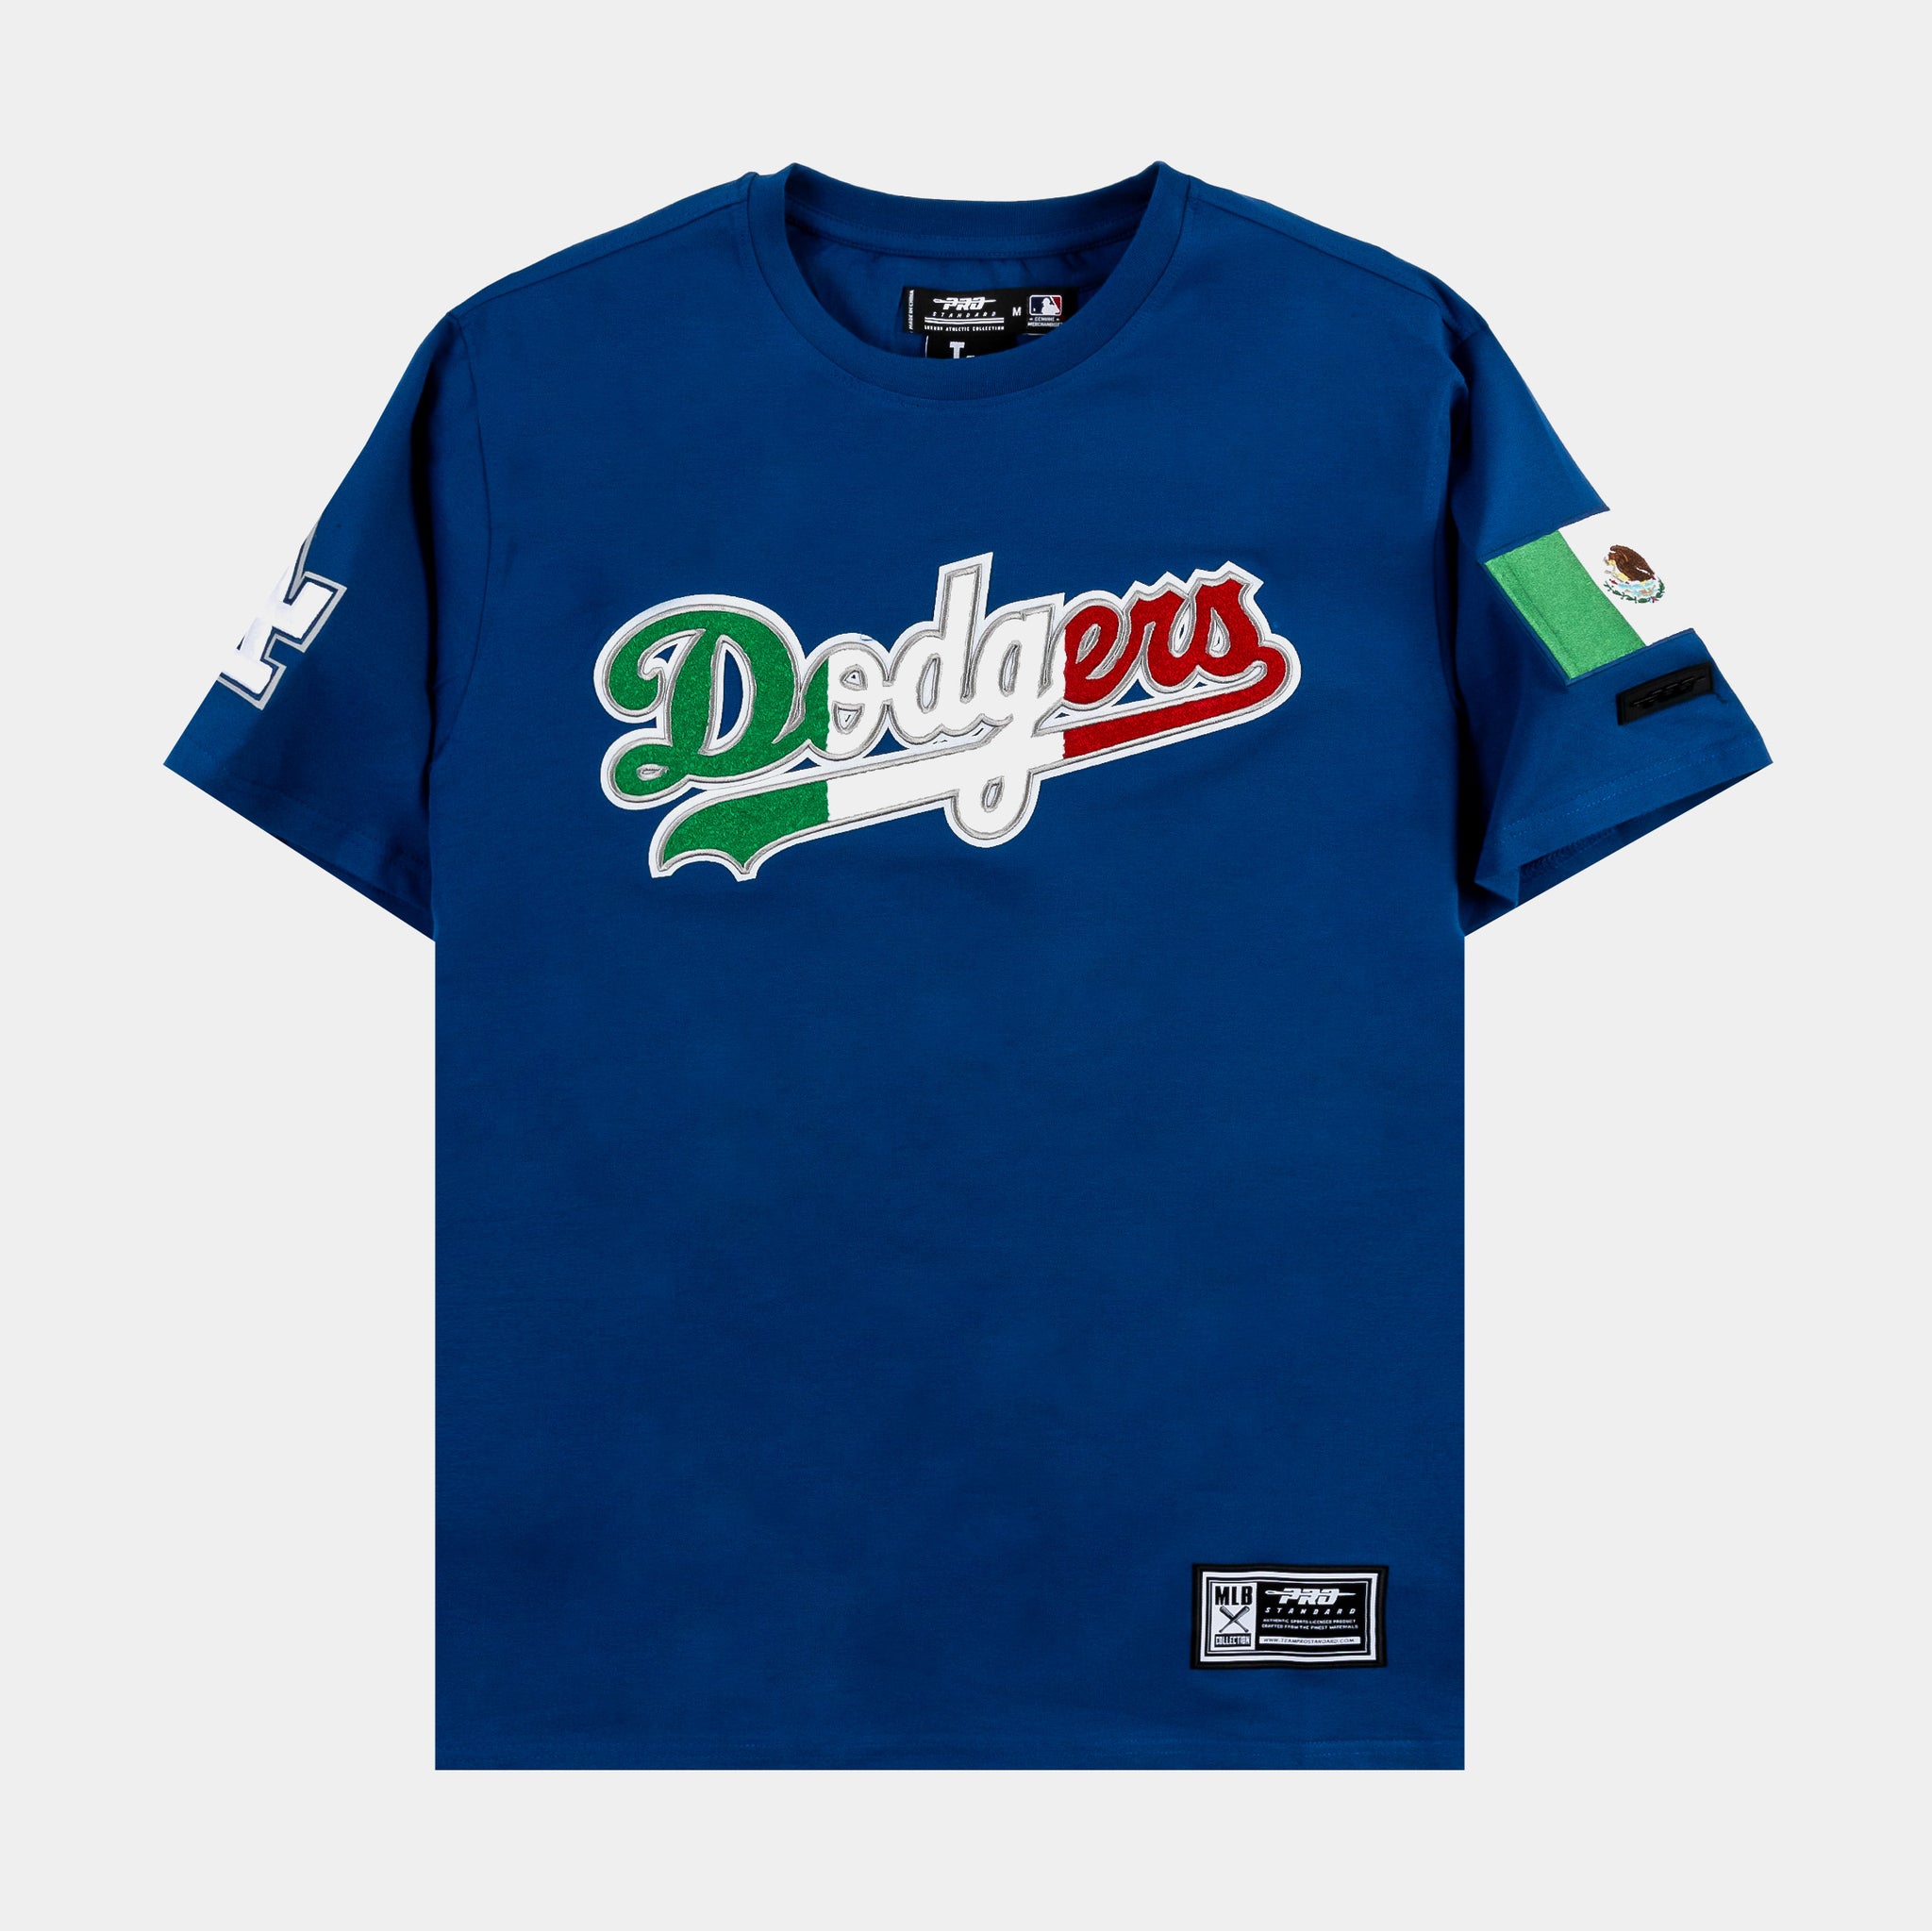 Los Angeles Dodgers Gear, Dodgers Jerseys, Store, L.A. Dodgers Pro